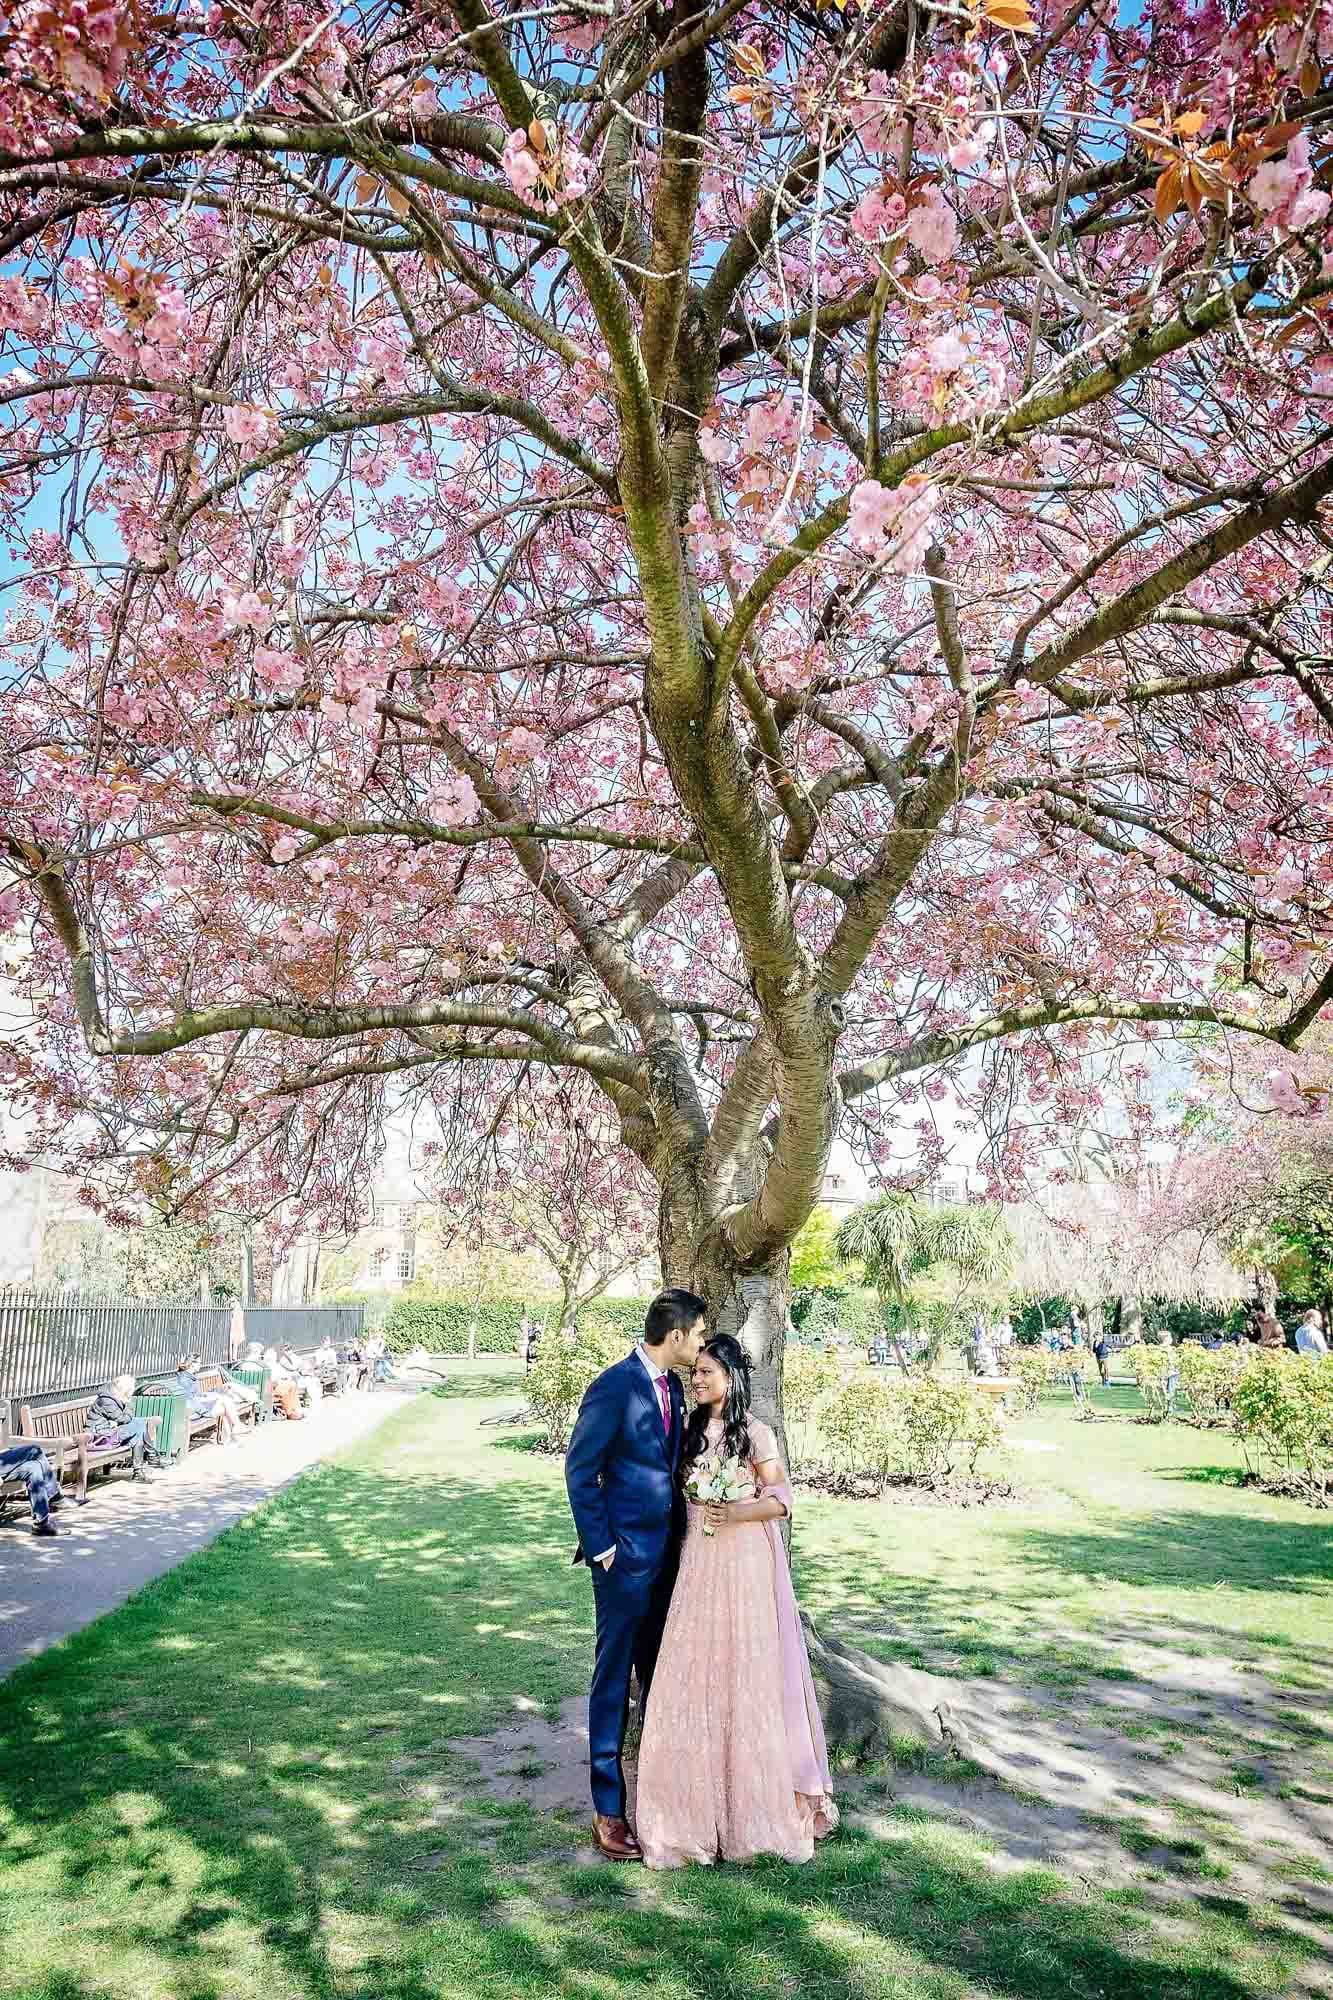 Groom kisses bride's forhead under pink blossom tree in London Park